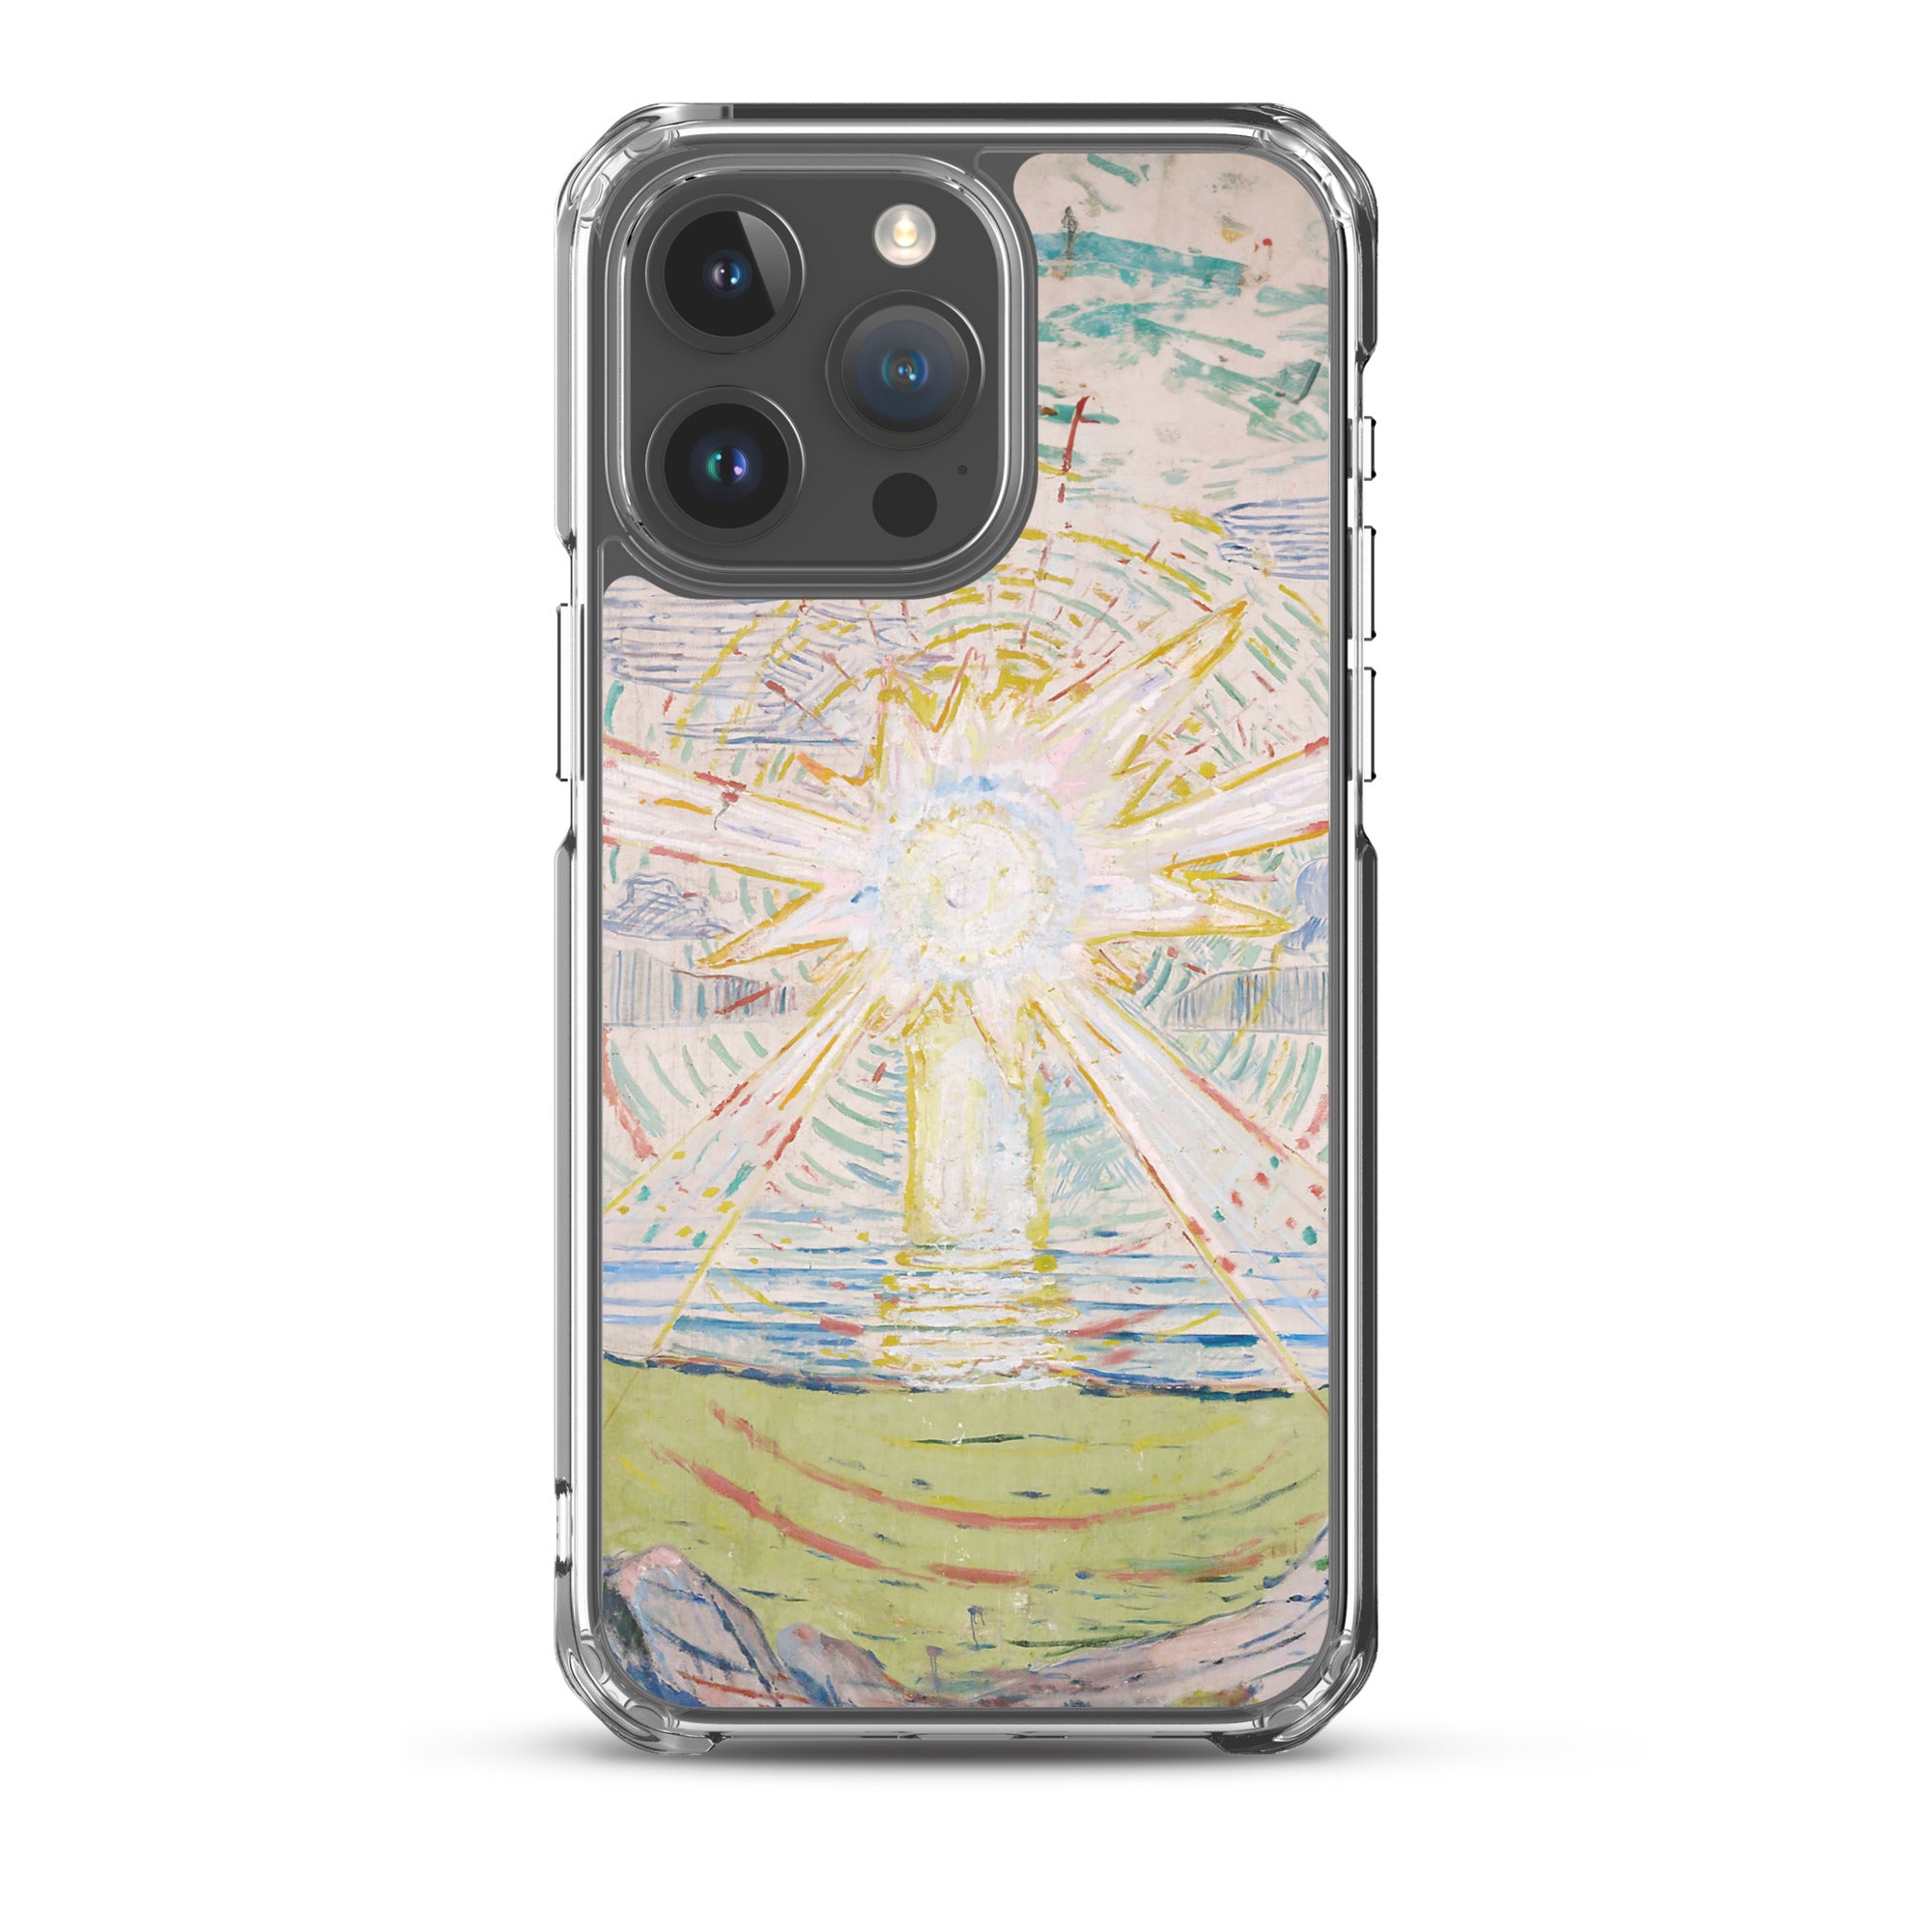 Edvard Munch „Die Sonne“, berühmtes Gemälde, iPhone®-Hülle | Transparente Kunsthülle für iPhone®